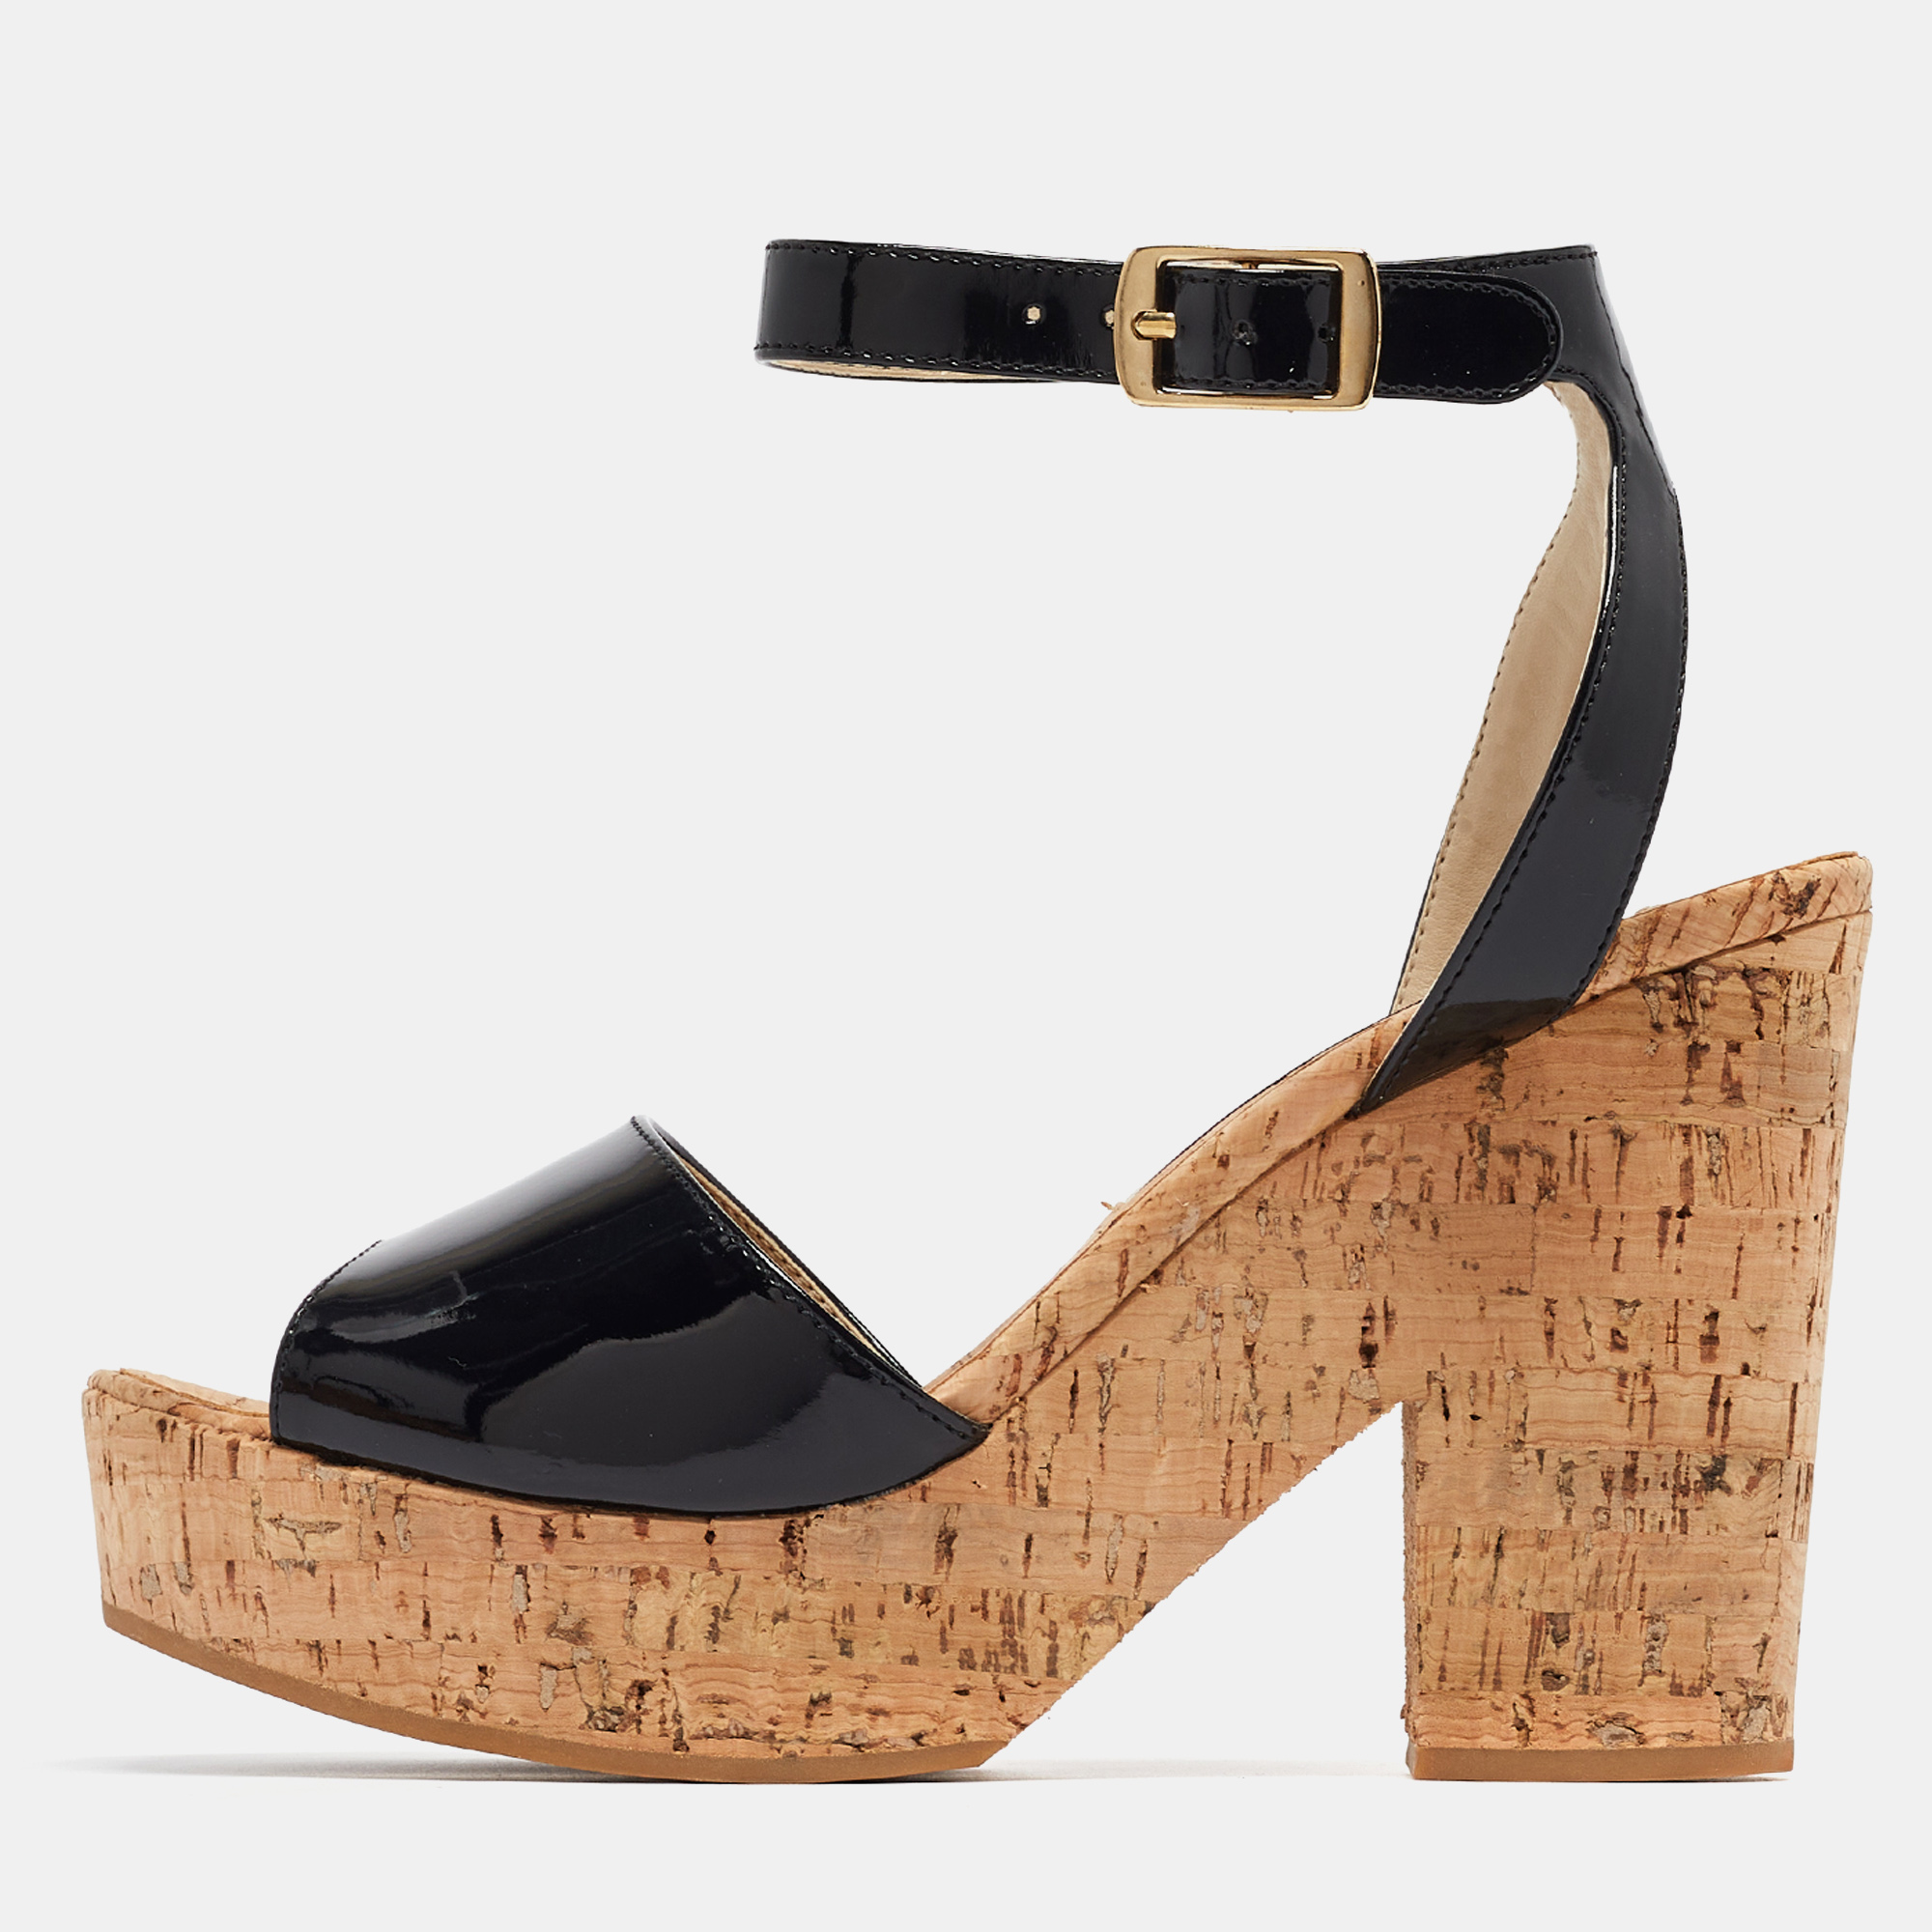 Stella mccartney black faux patent and cork platform ankle strap sandals size 38